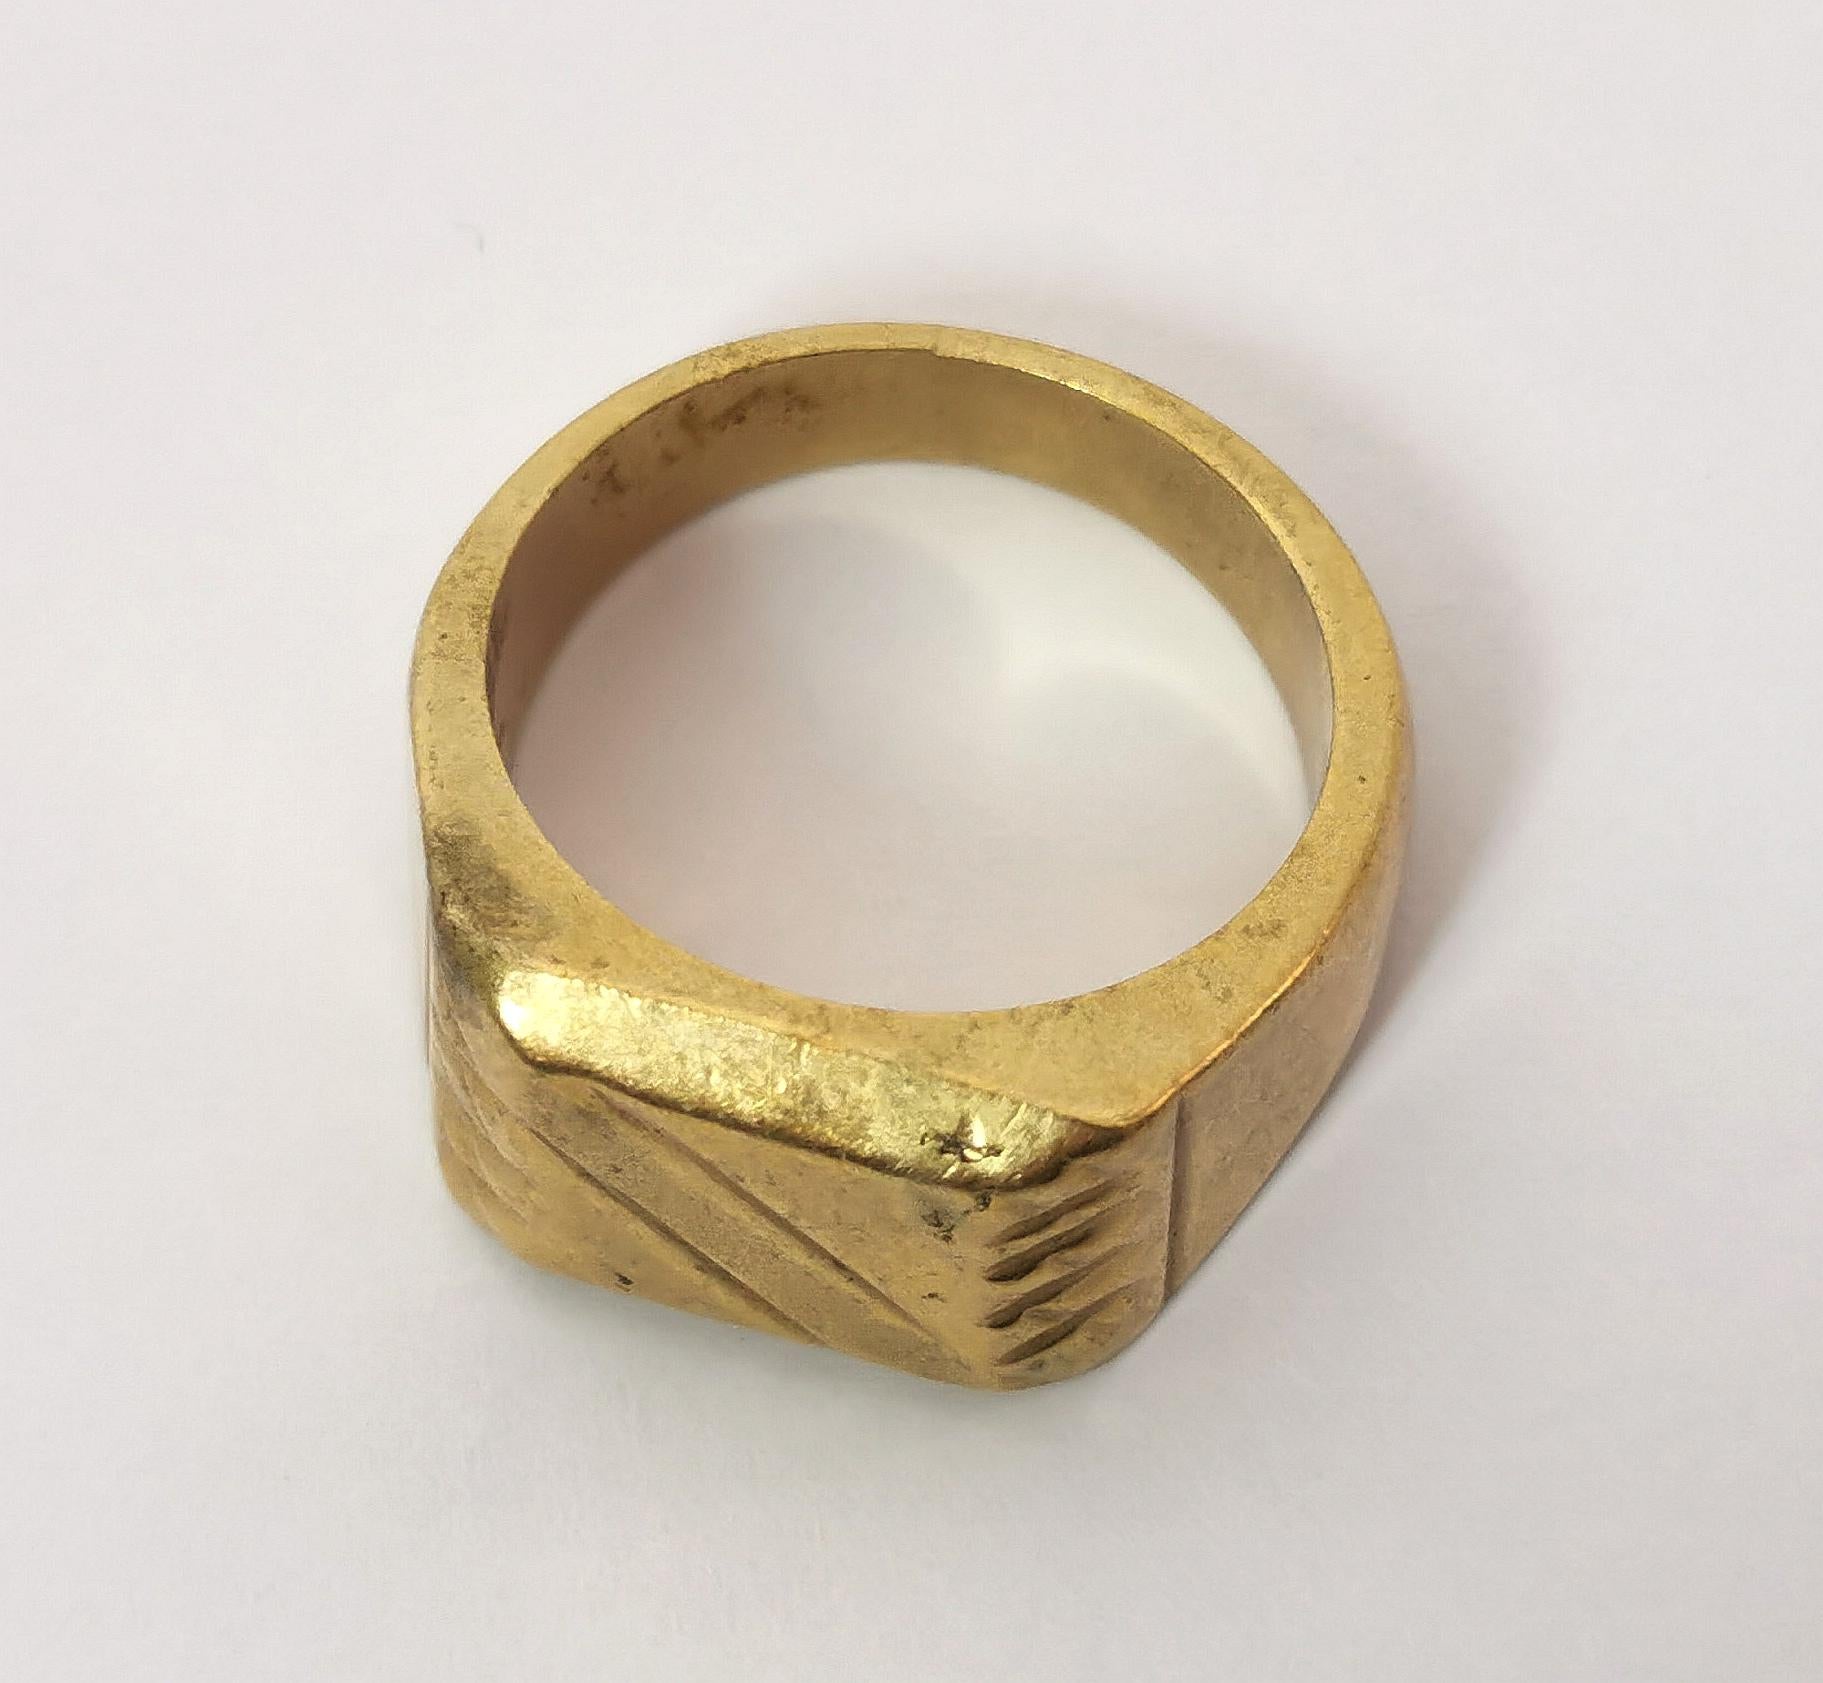 Vintage 18k gold plated signet ring, c1970s 1